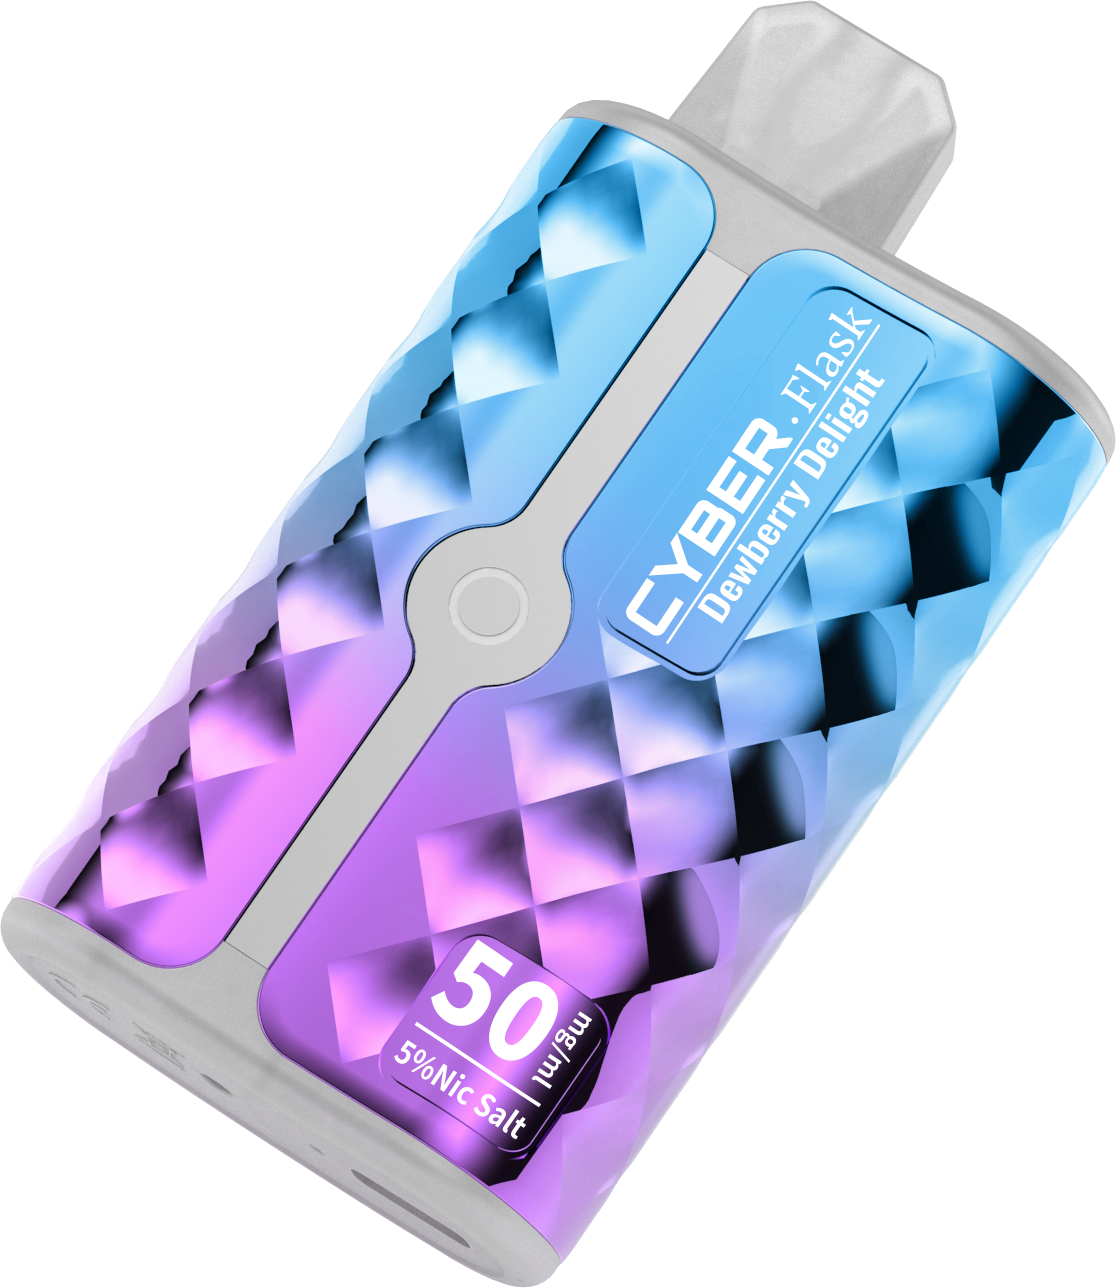 Limitless Mod Co. X Flavorforge Cyber Flask CREAM SERIES Disposable Vape - Vape Masterz